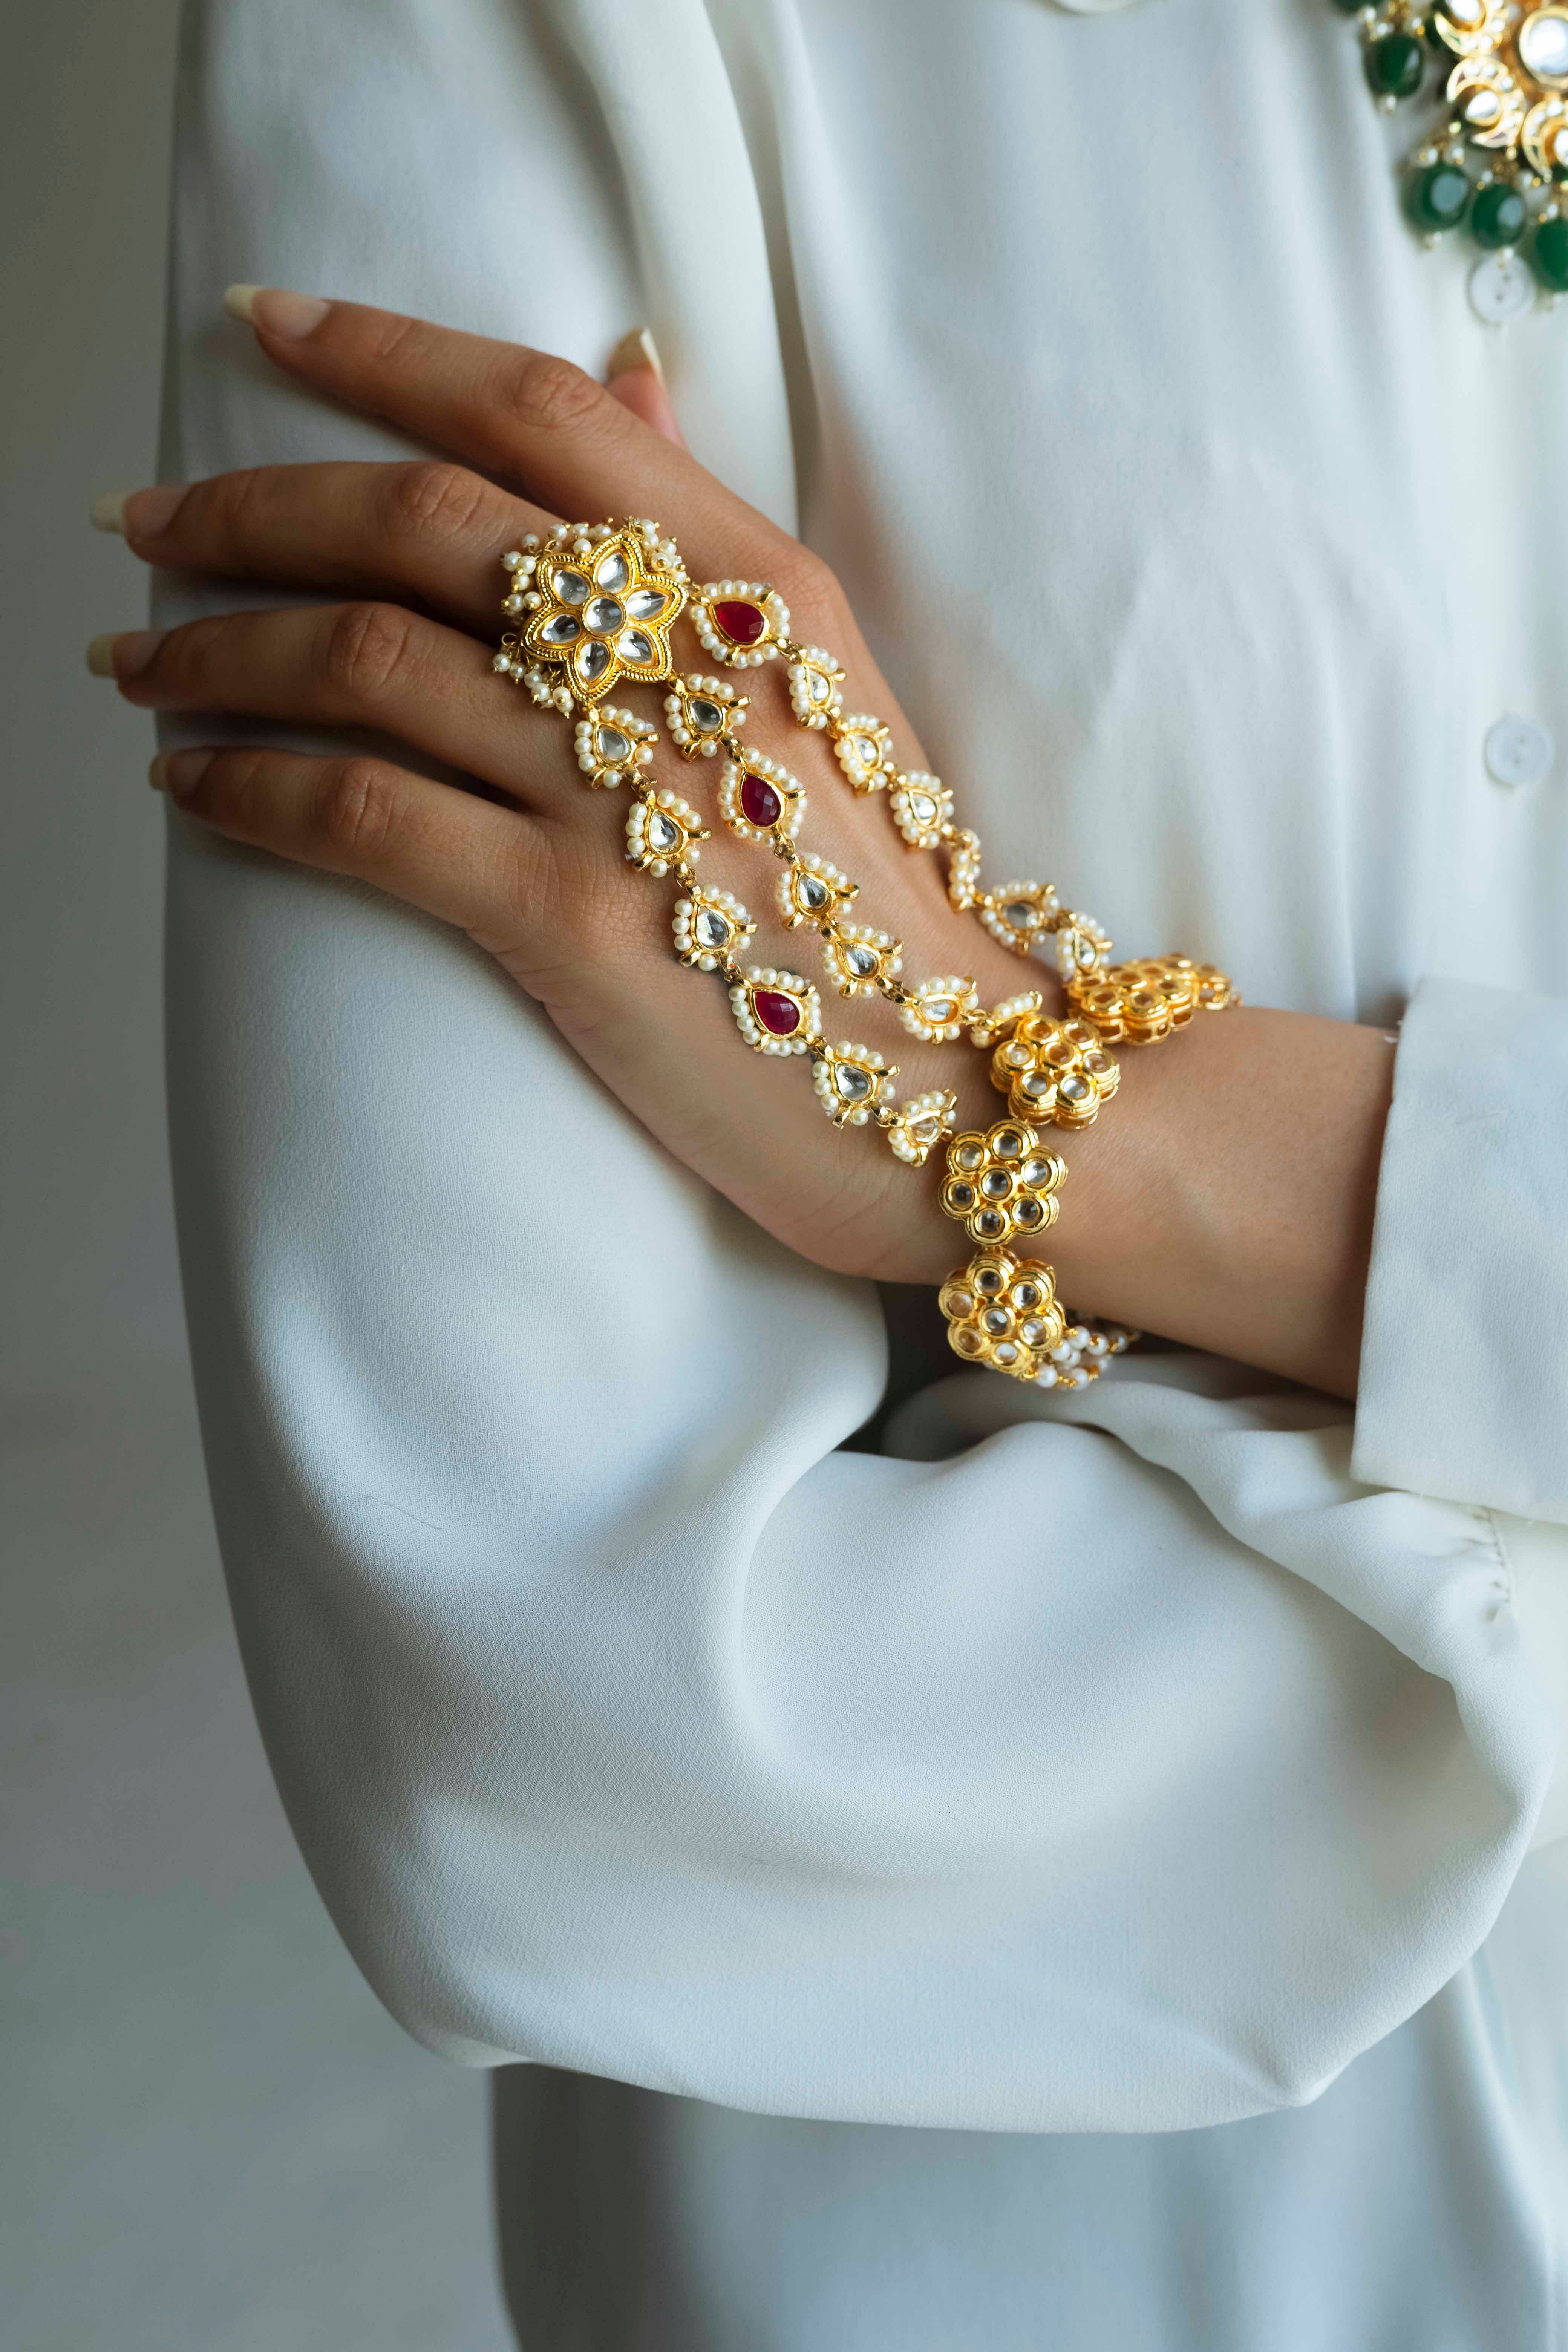 Explore the World Via Jewelry | Meet the Jewelers